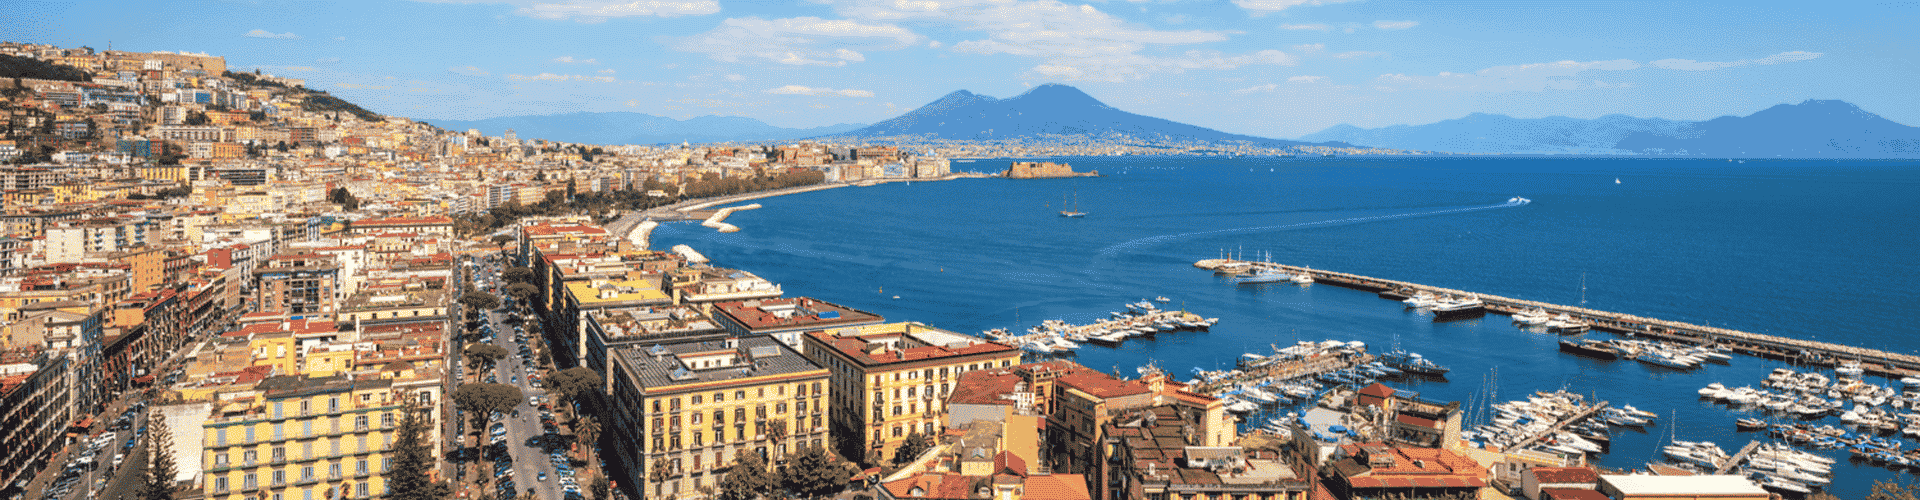 Naples Skyline